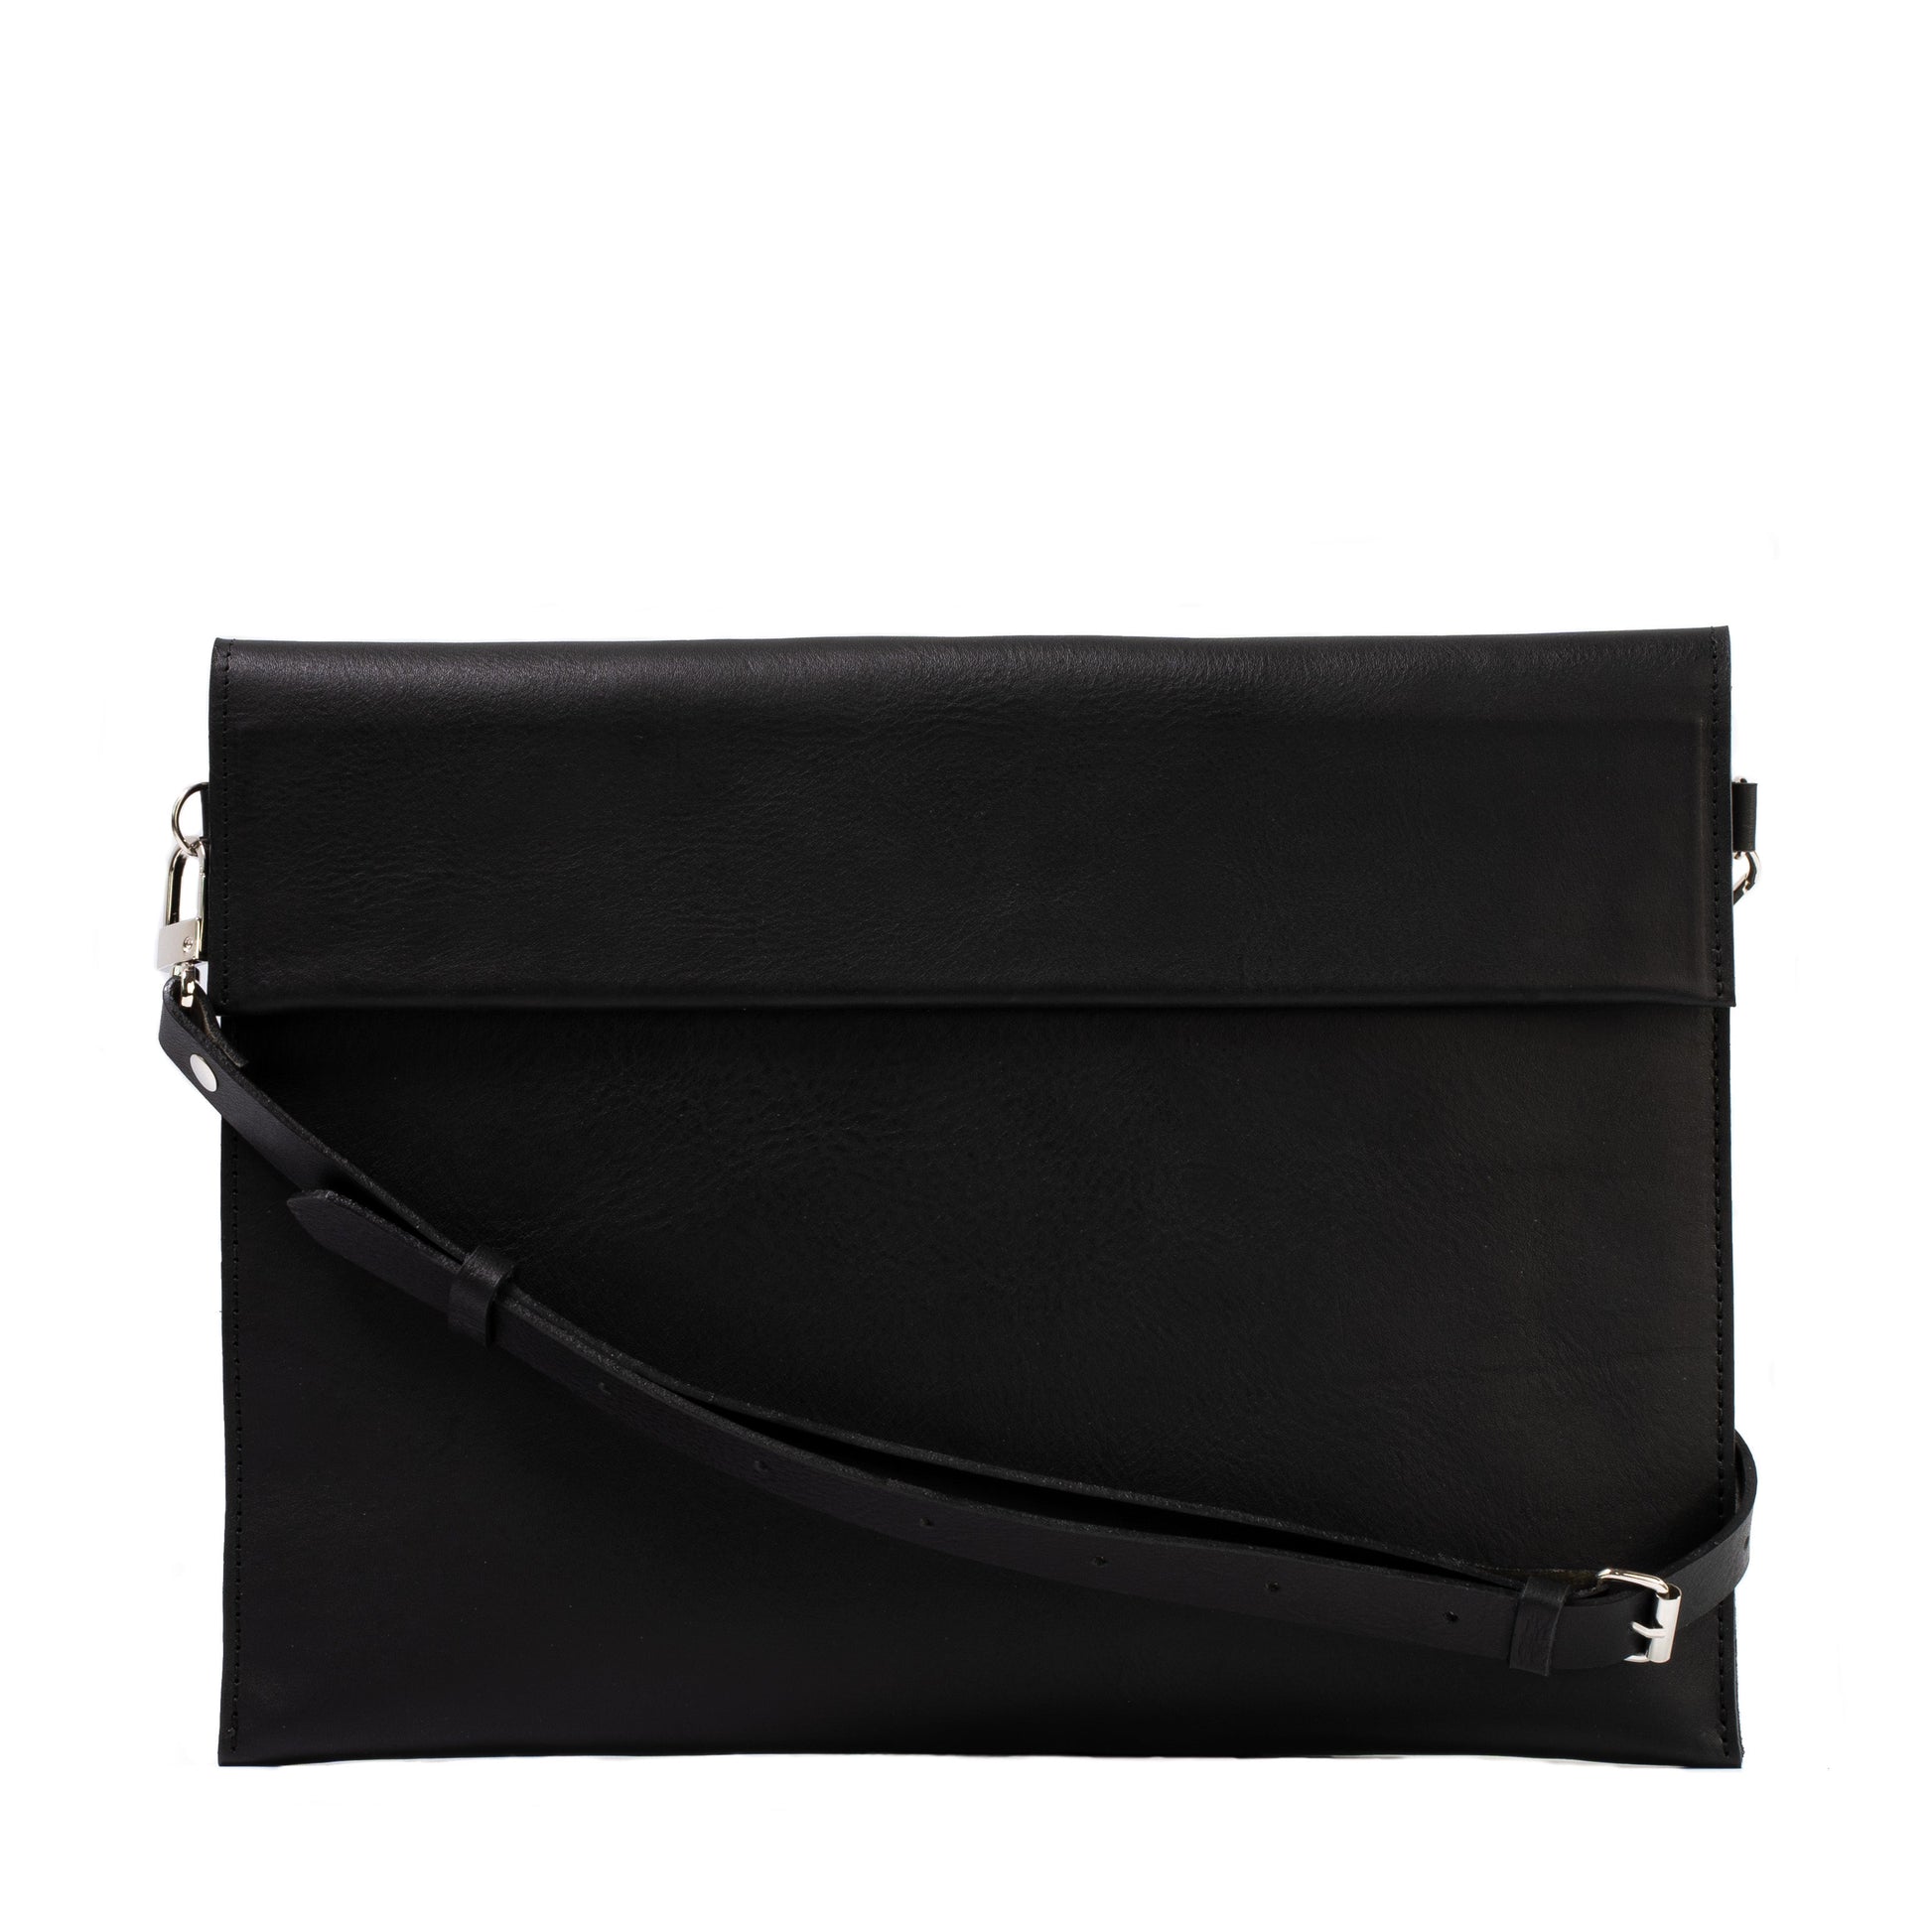 Leather Bag for iPad - The Minimalist 2.0-8